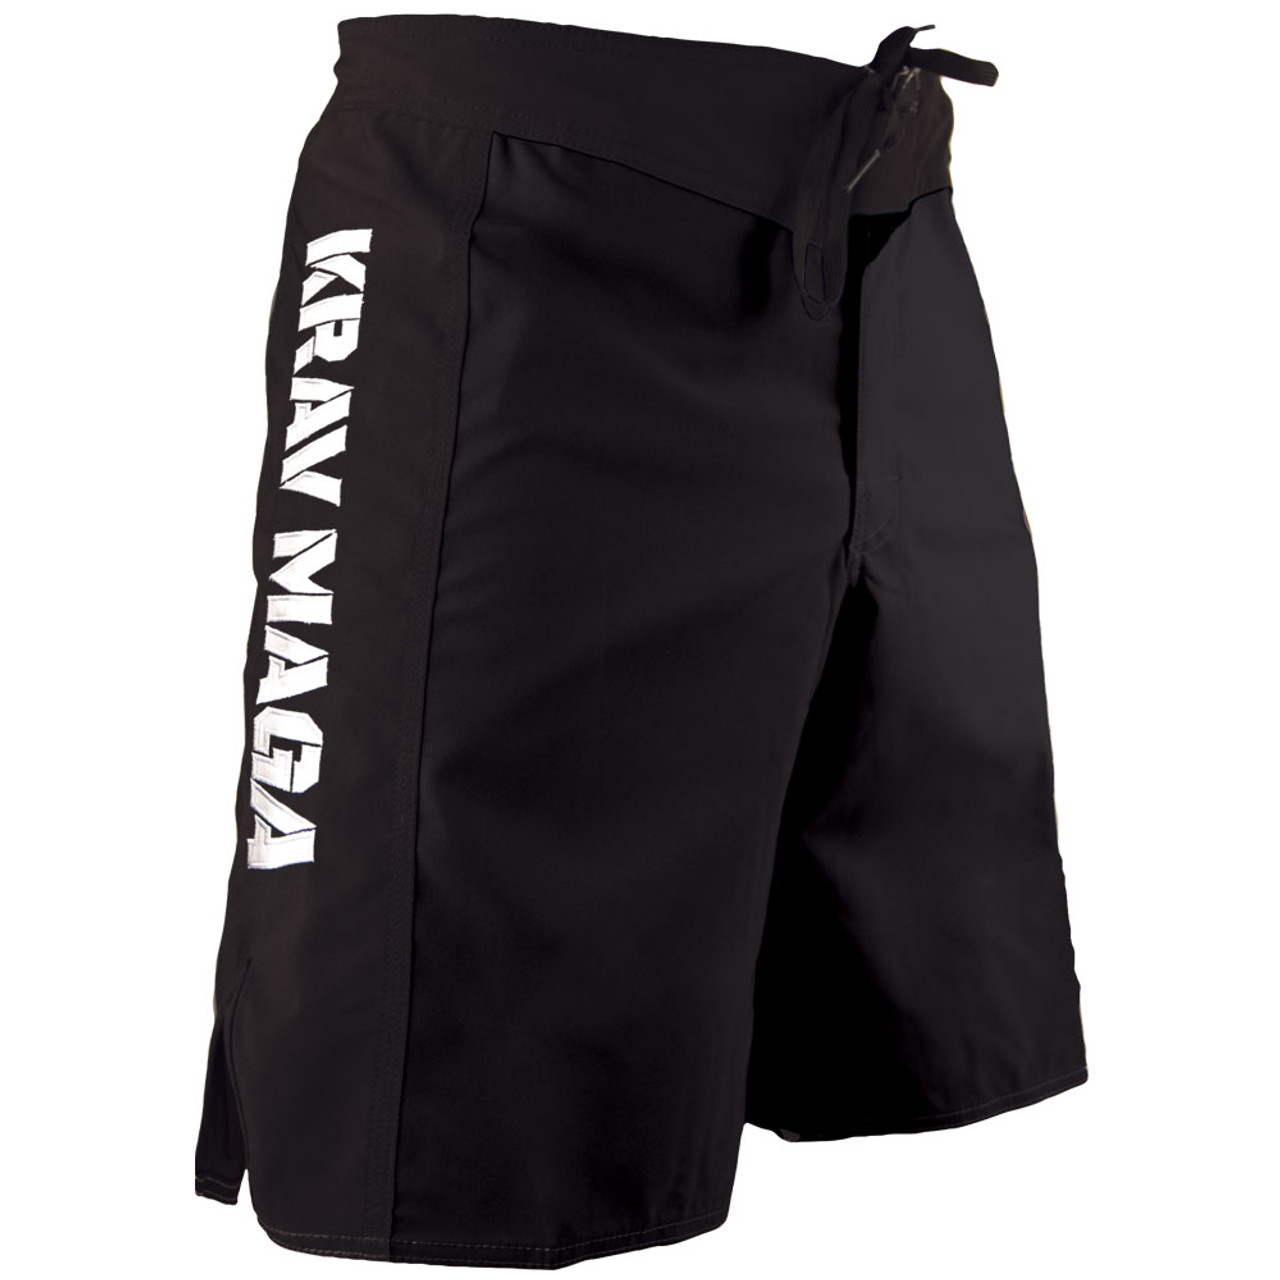 Revgear Krav Maga Black Ops One Shorts – Black